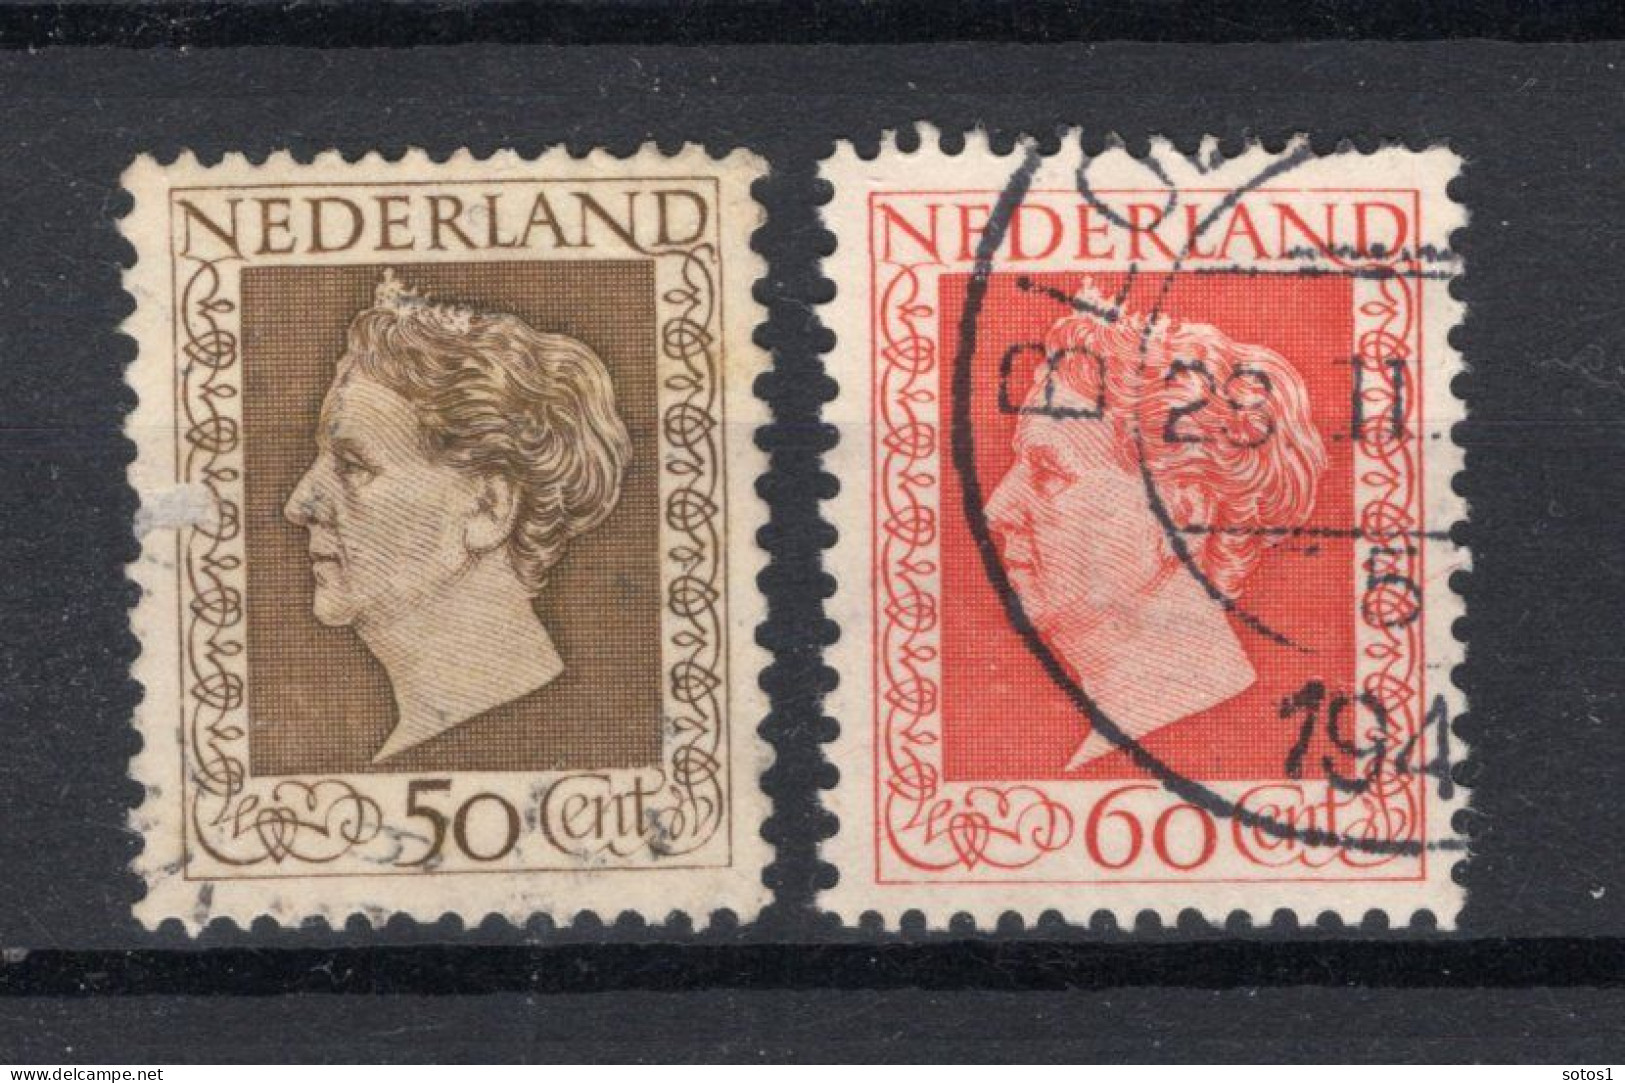 NEDERLAND 488/489 Gestempeld 1948 - Koningin Wilhelmina - Used Stamps